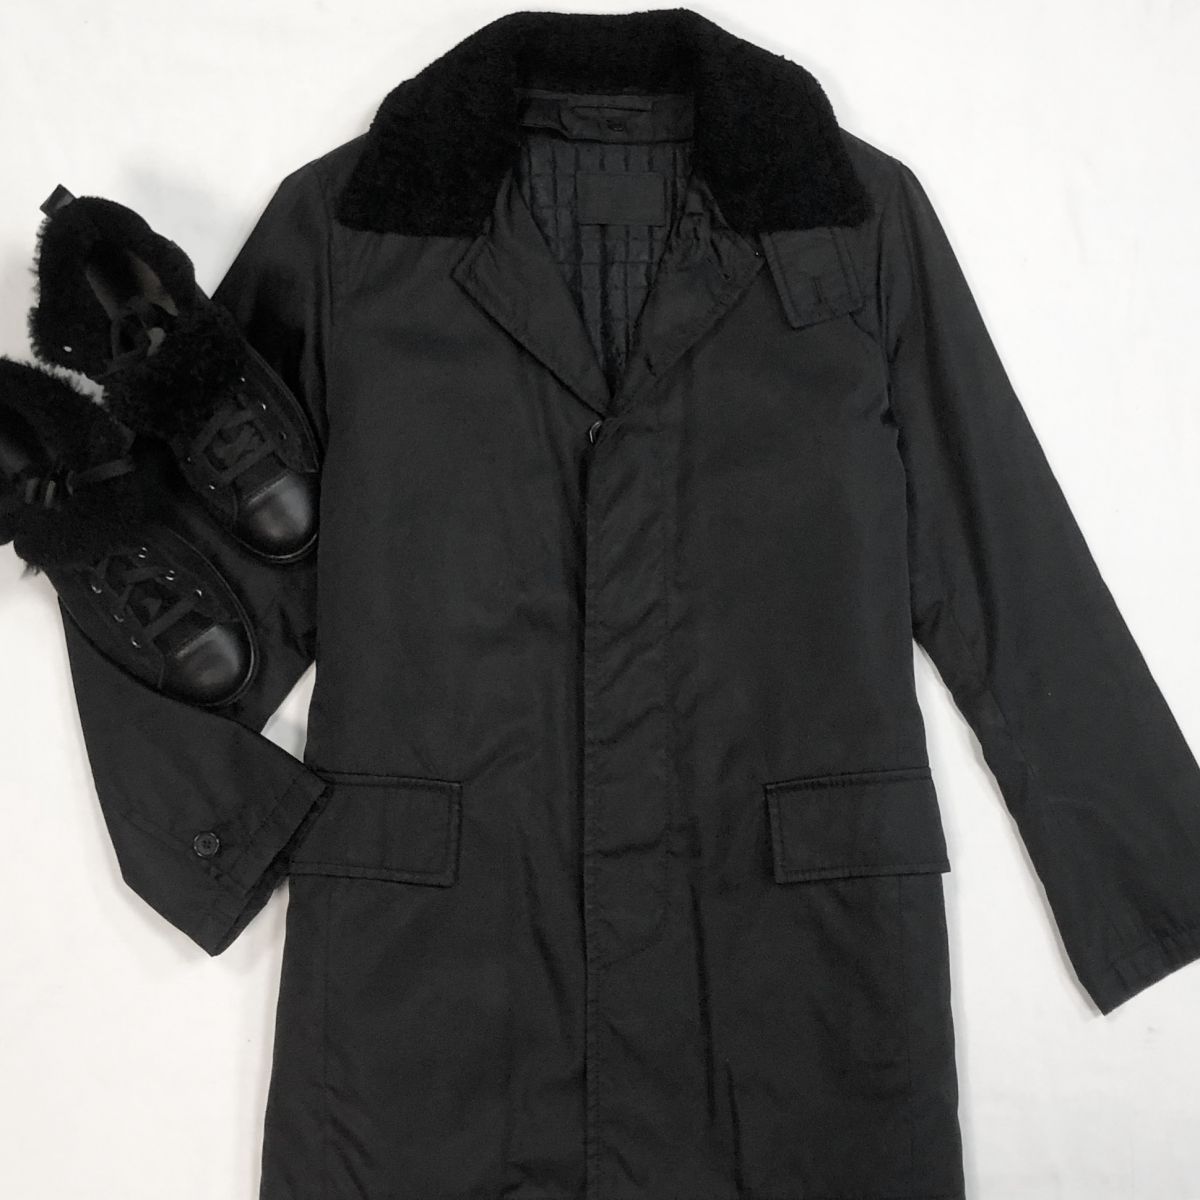 #mechtamen Куртка Prada размер 46 цена 30 770 рубКеды Dqouared размер 40 цена 9 231 руб